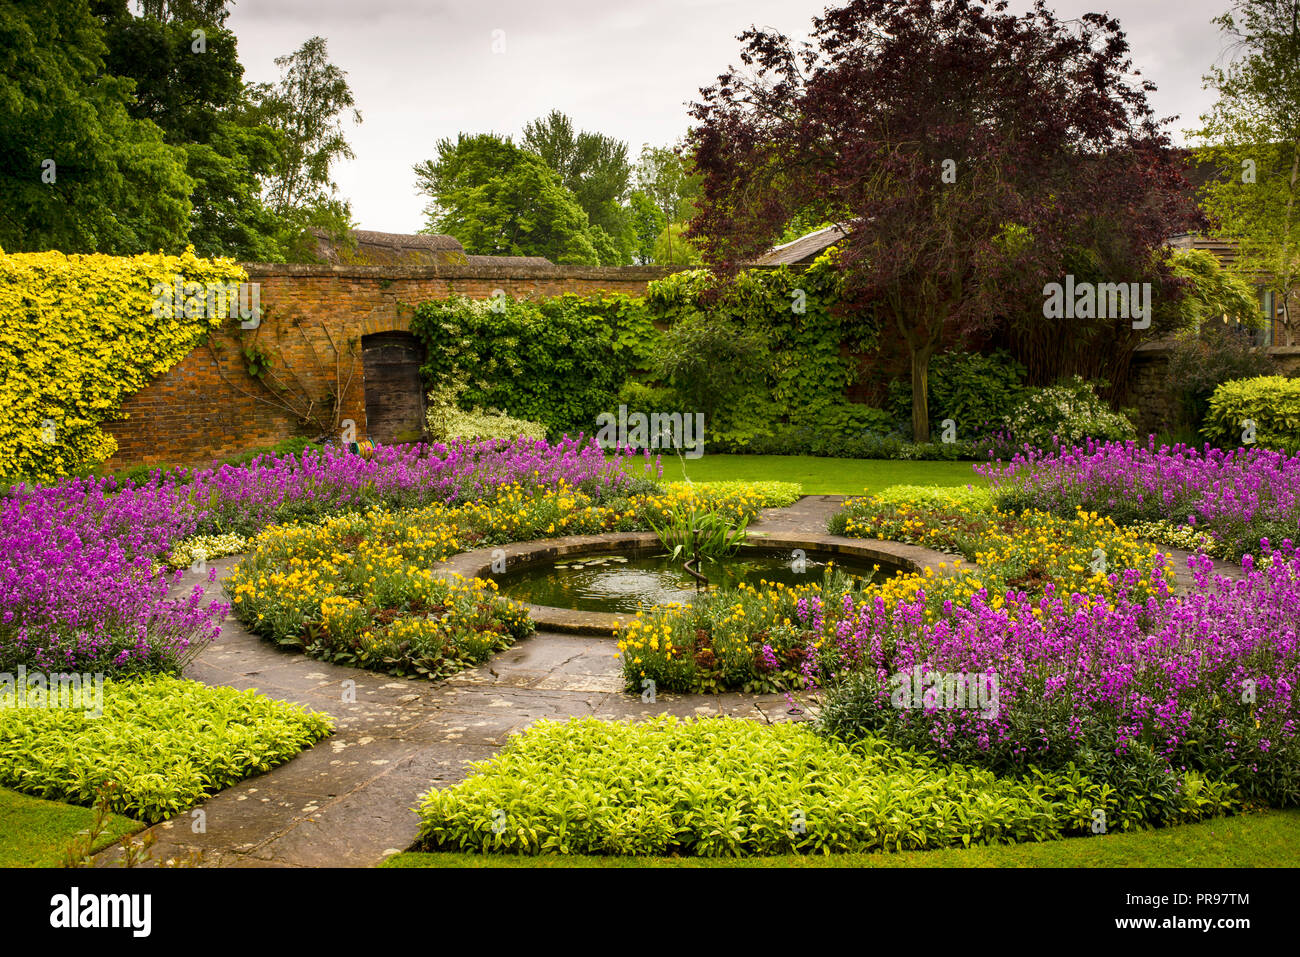 Christ Church Meadows Garden à Oxford, Angleterre. Banque D'Images